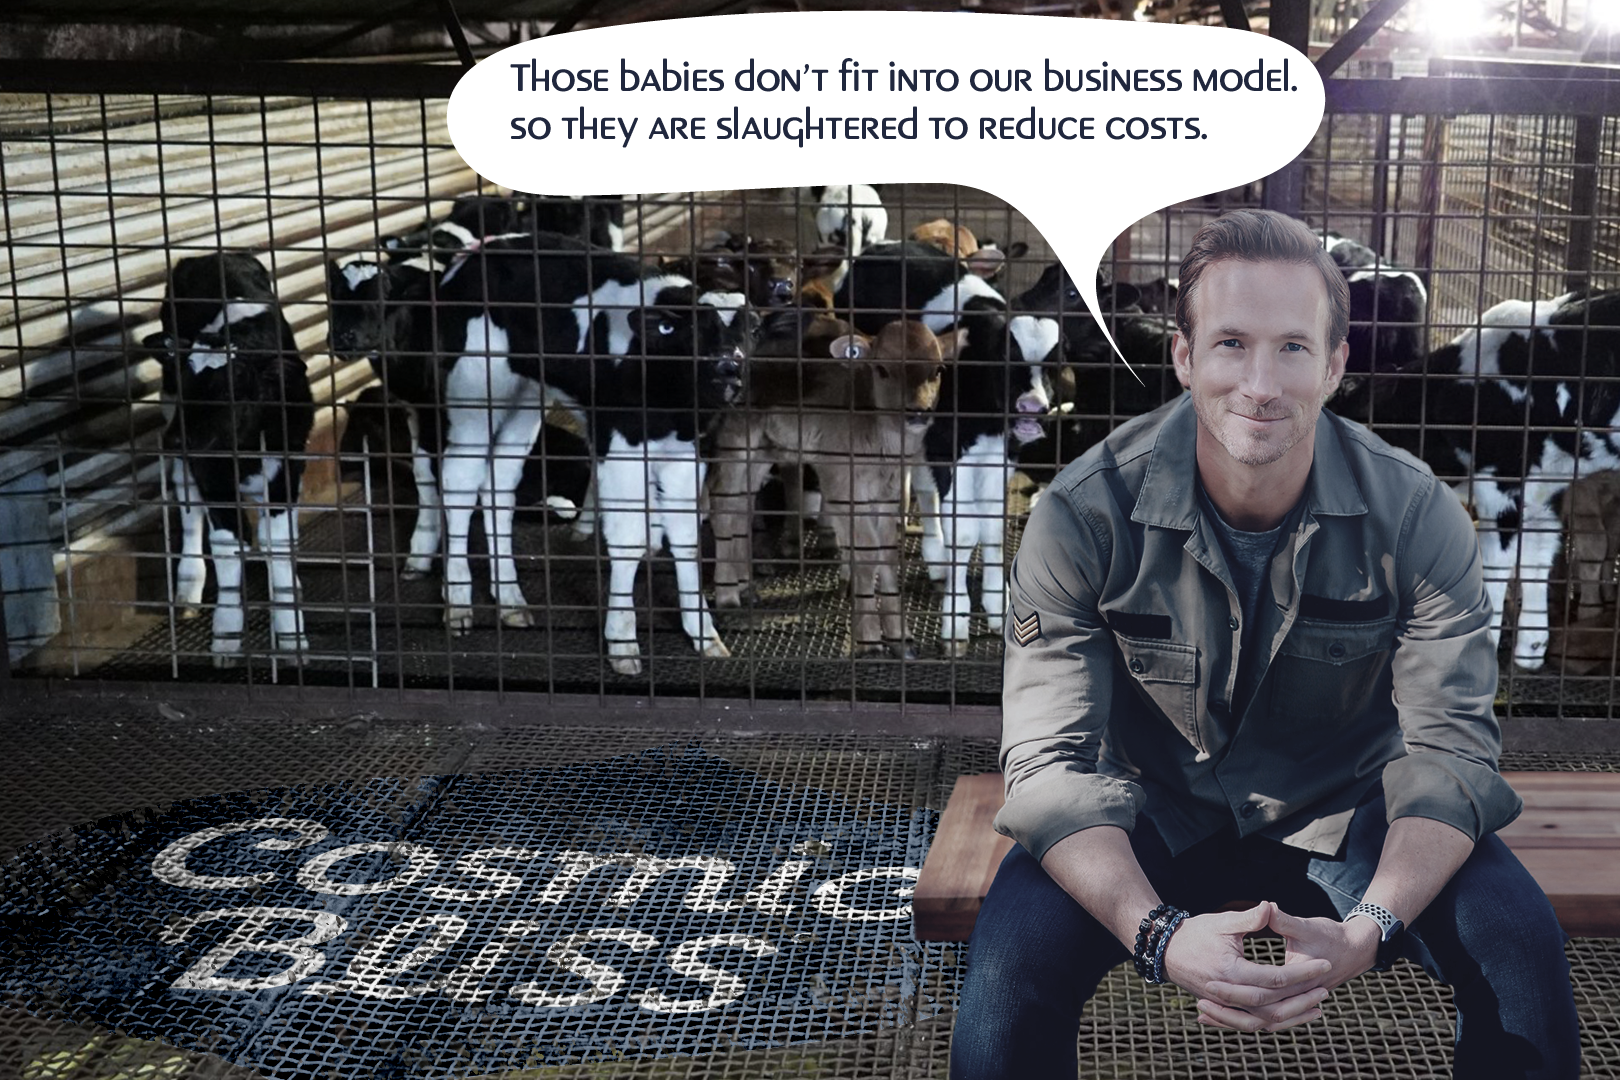 Cosmic Bliss slaughtering baby calves